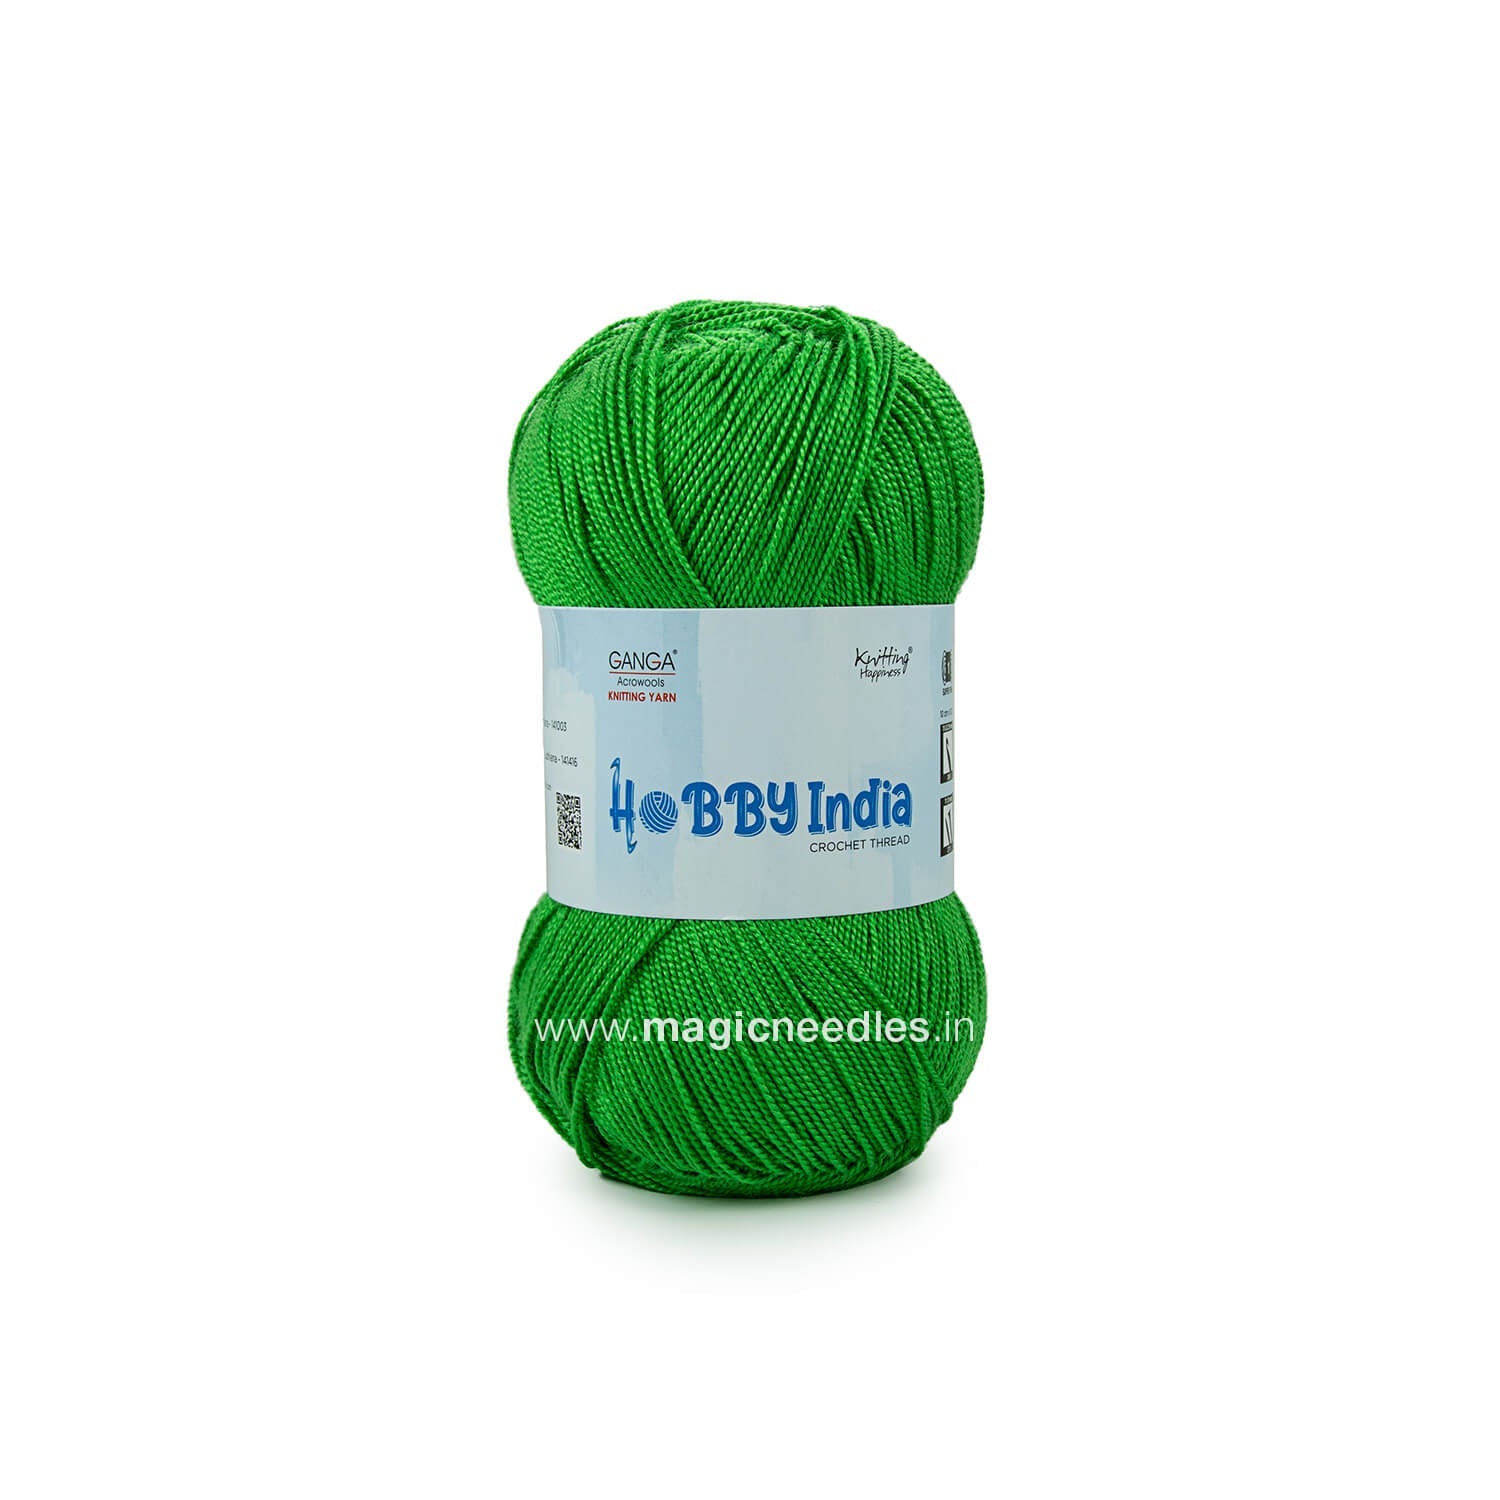 Ganga Hobby India Crochet Thread - Green 05